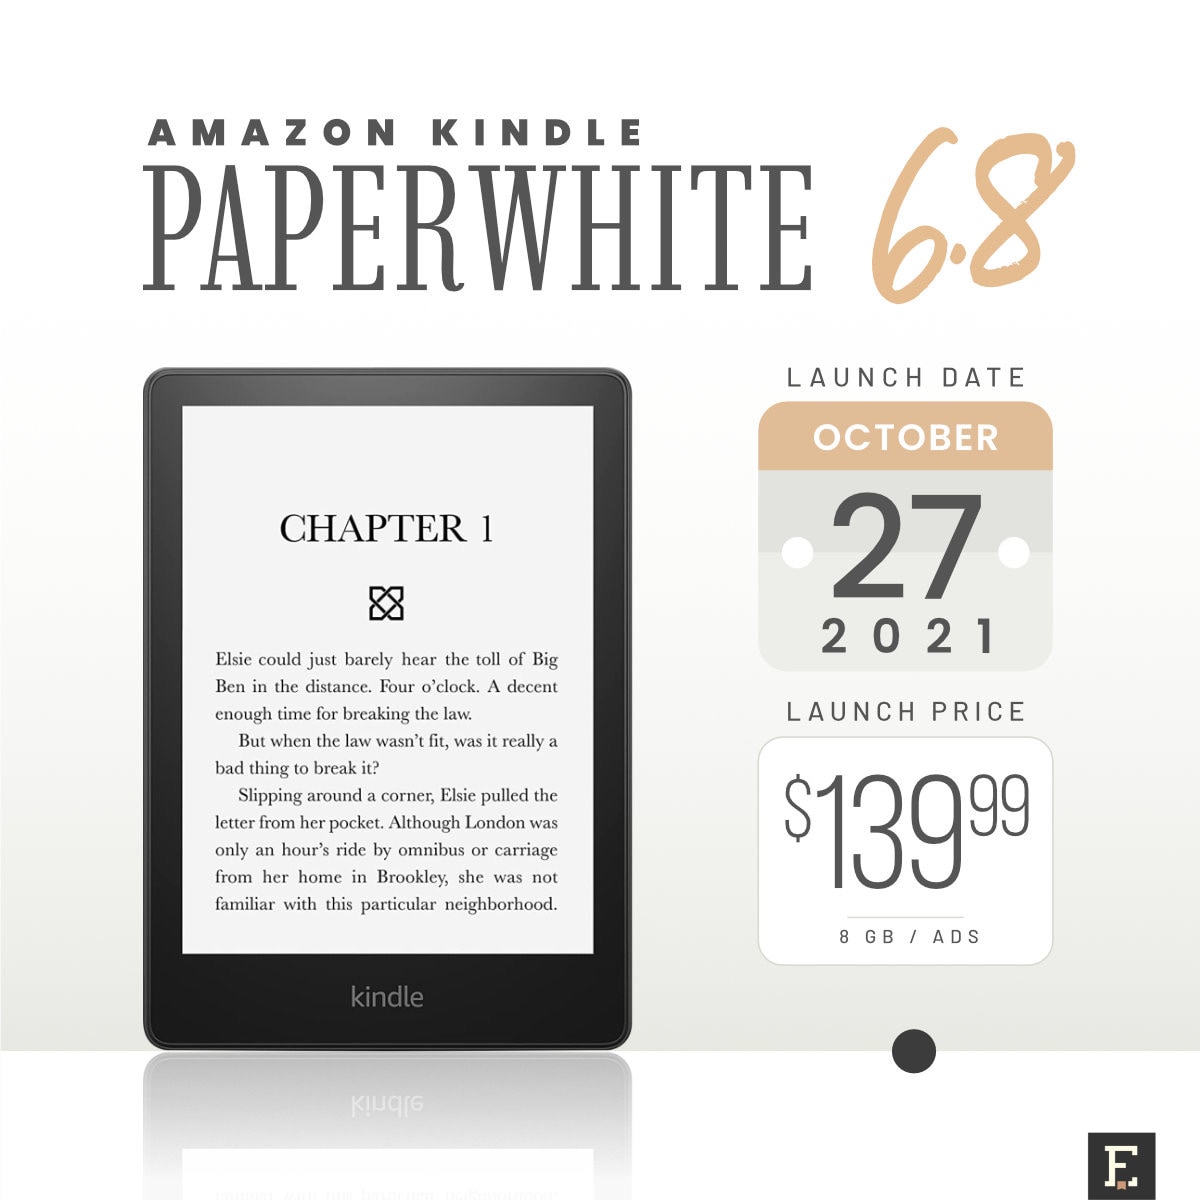 Kindle Paperwhite 6.8 - Black Friday 2021 price